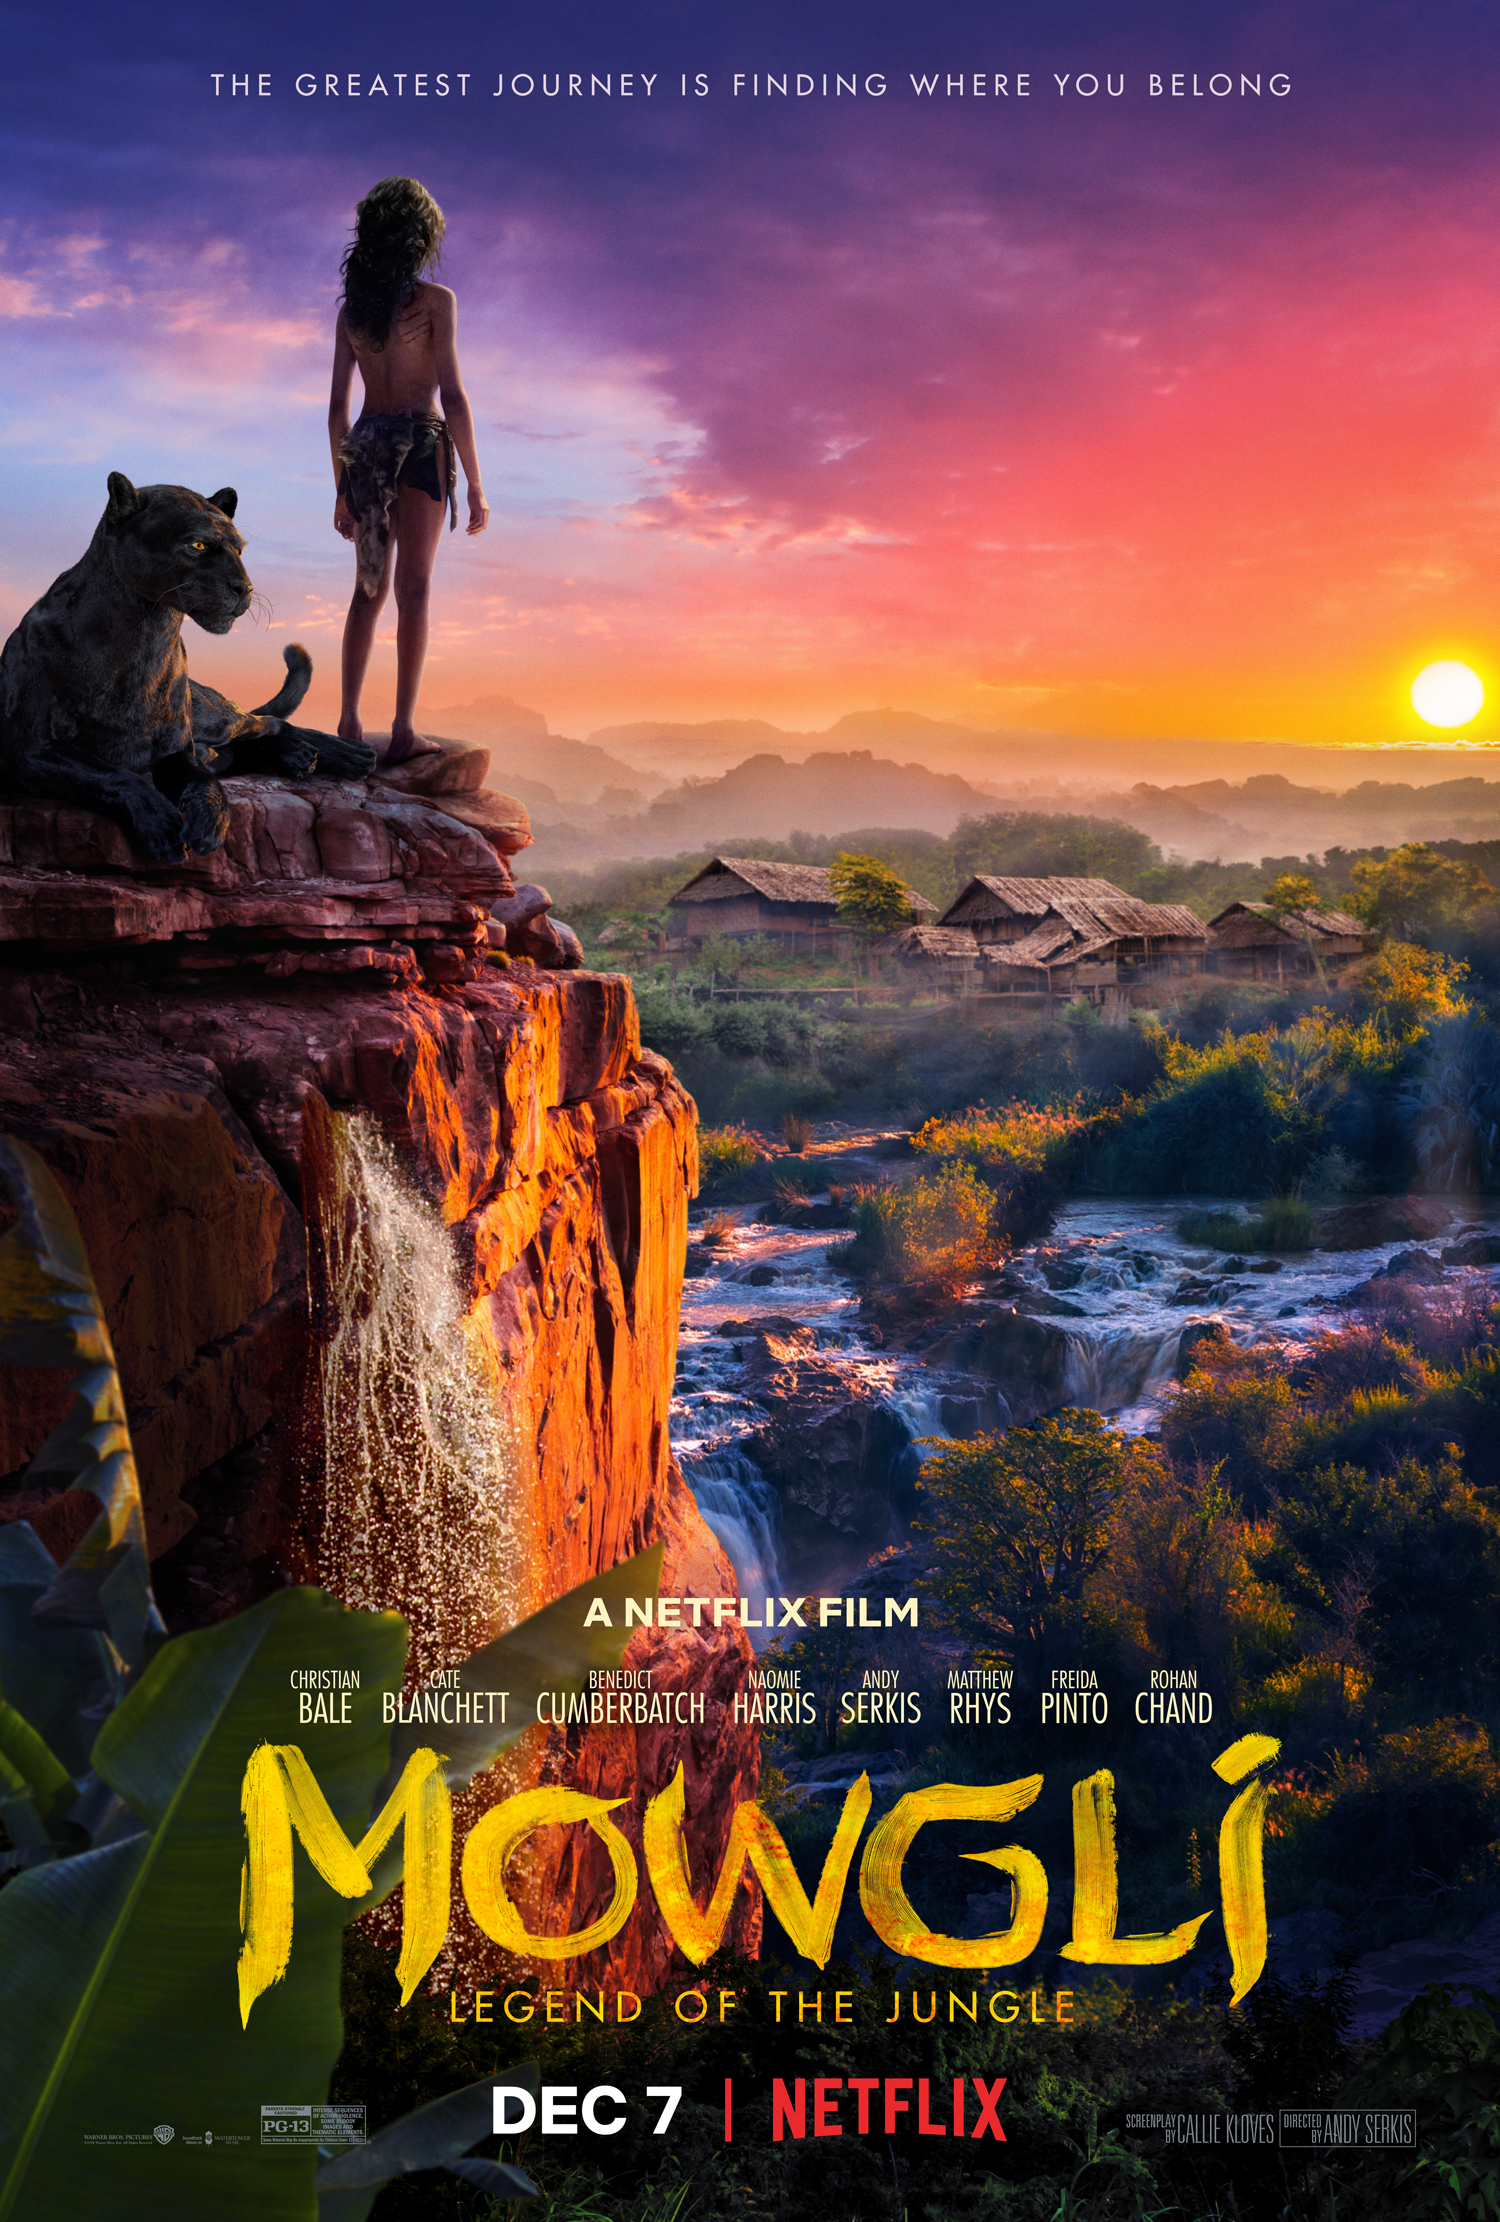 Mowgli Legend of the Jungle Warner Bros image image